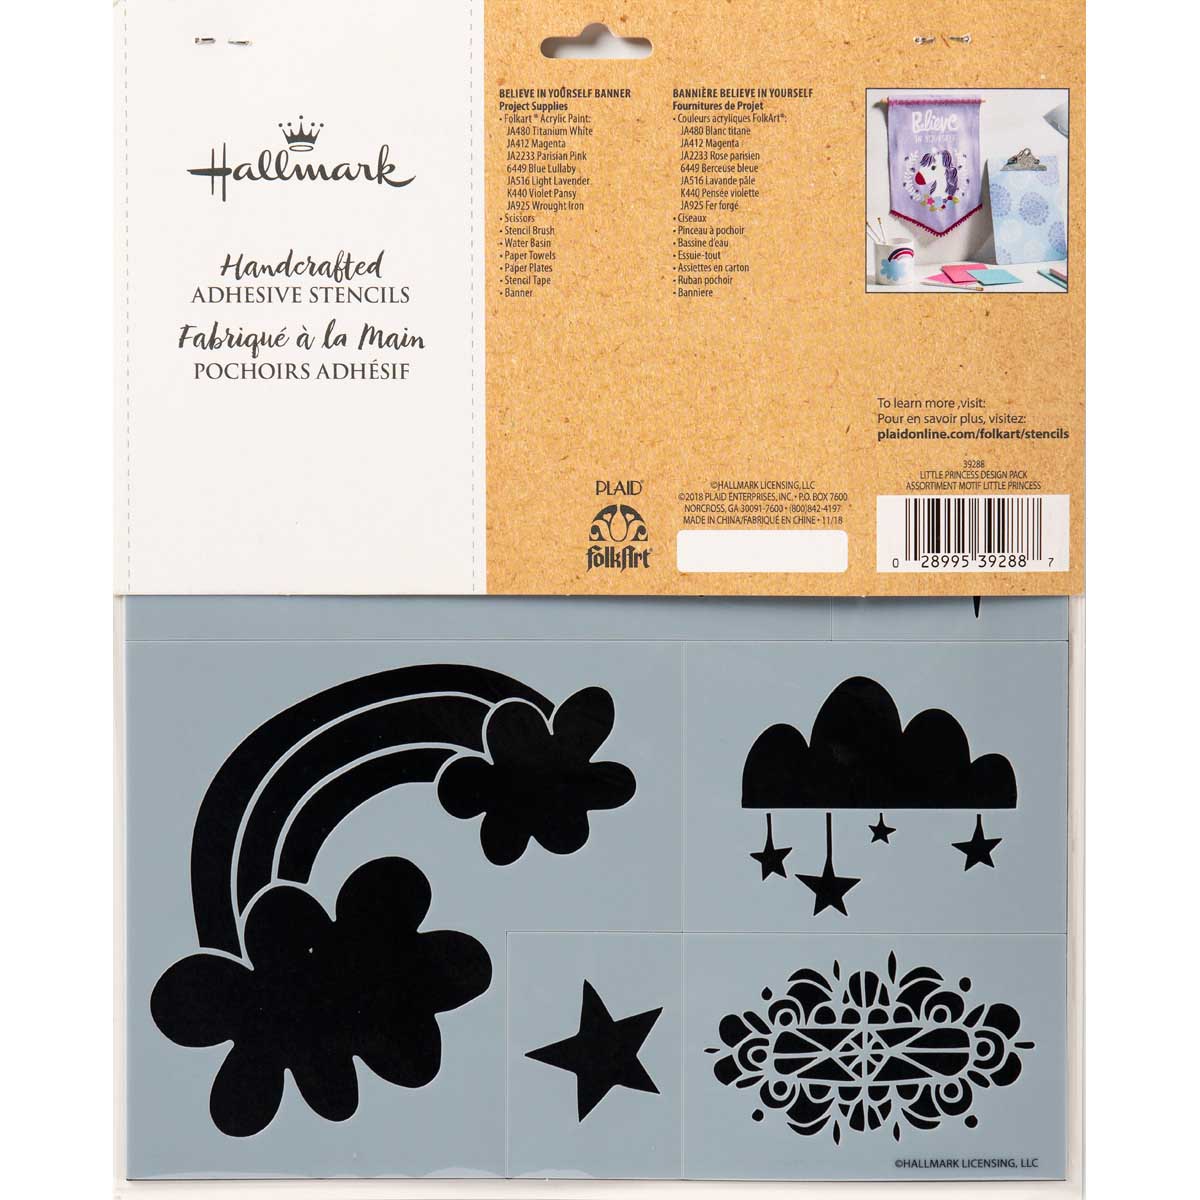 Hallmark Handcrafted Adhesive Stencils - Little Princess Design Pack, 8-1/2